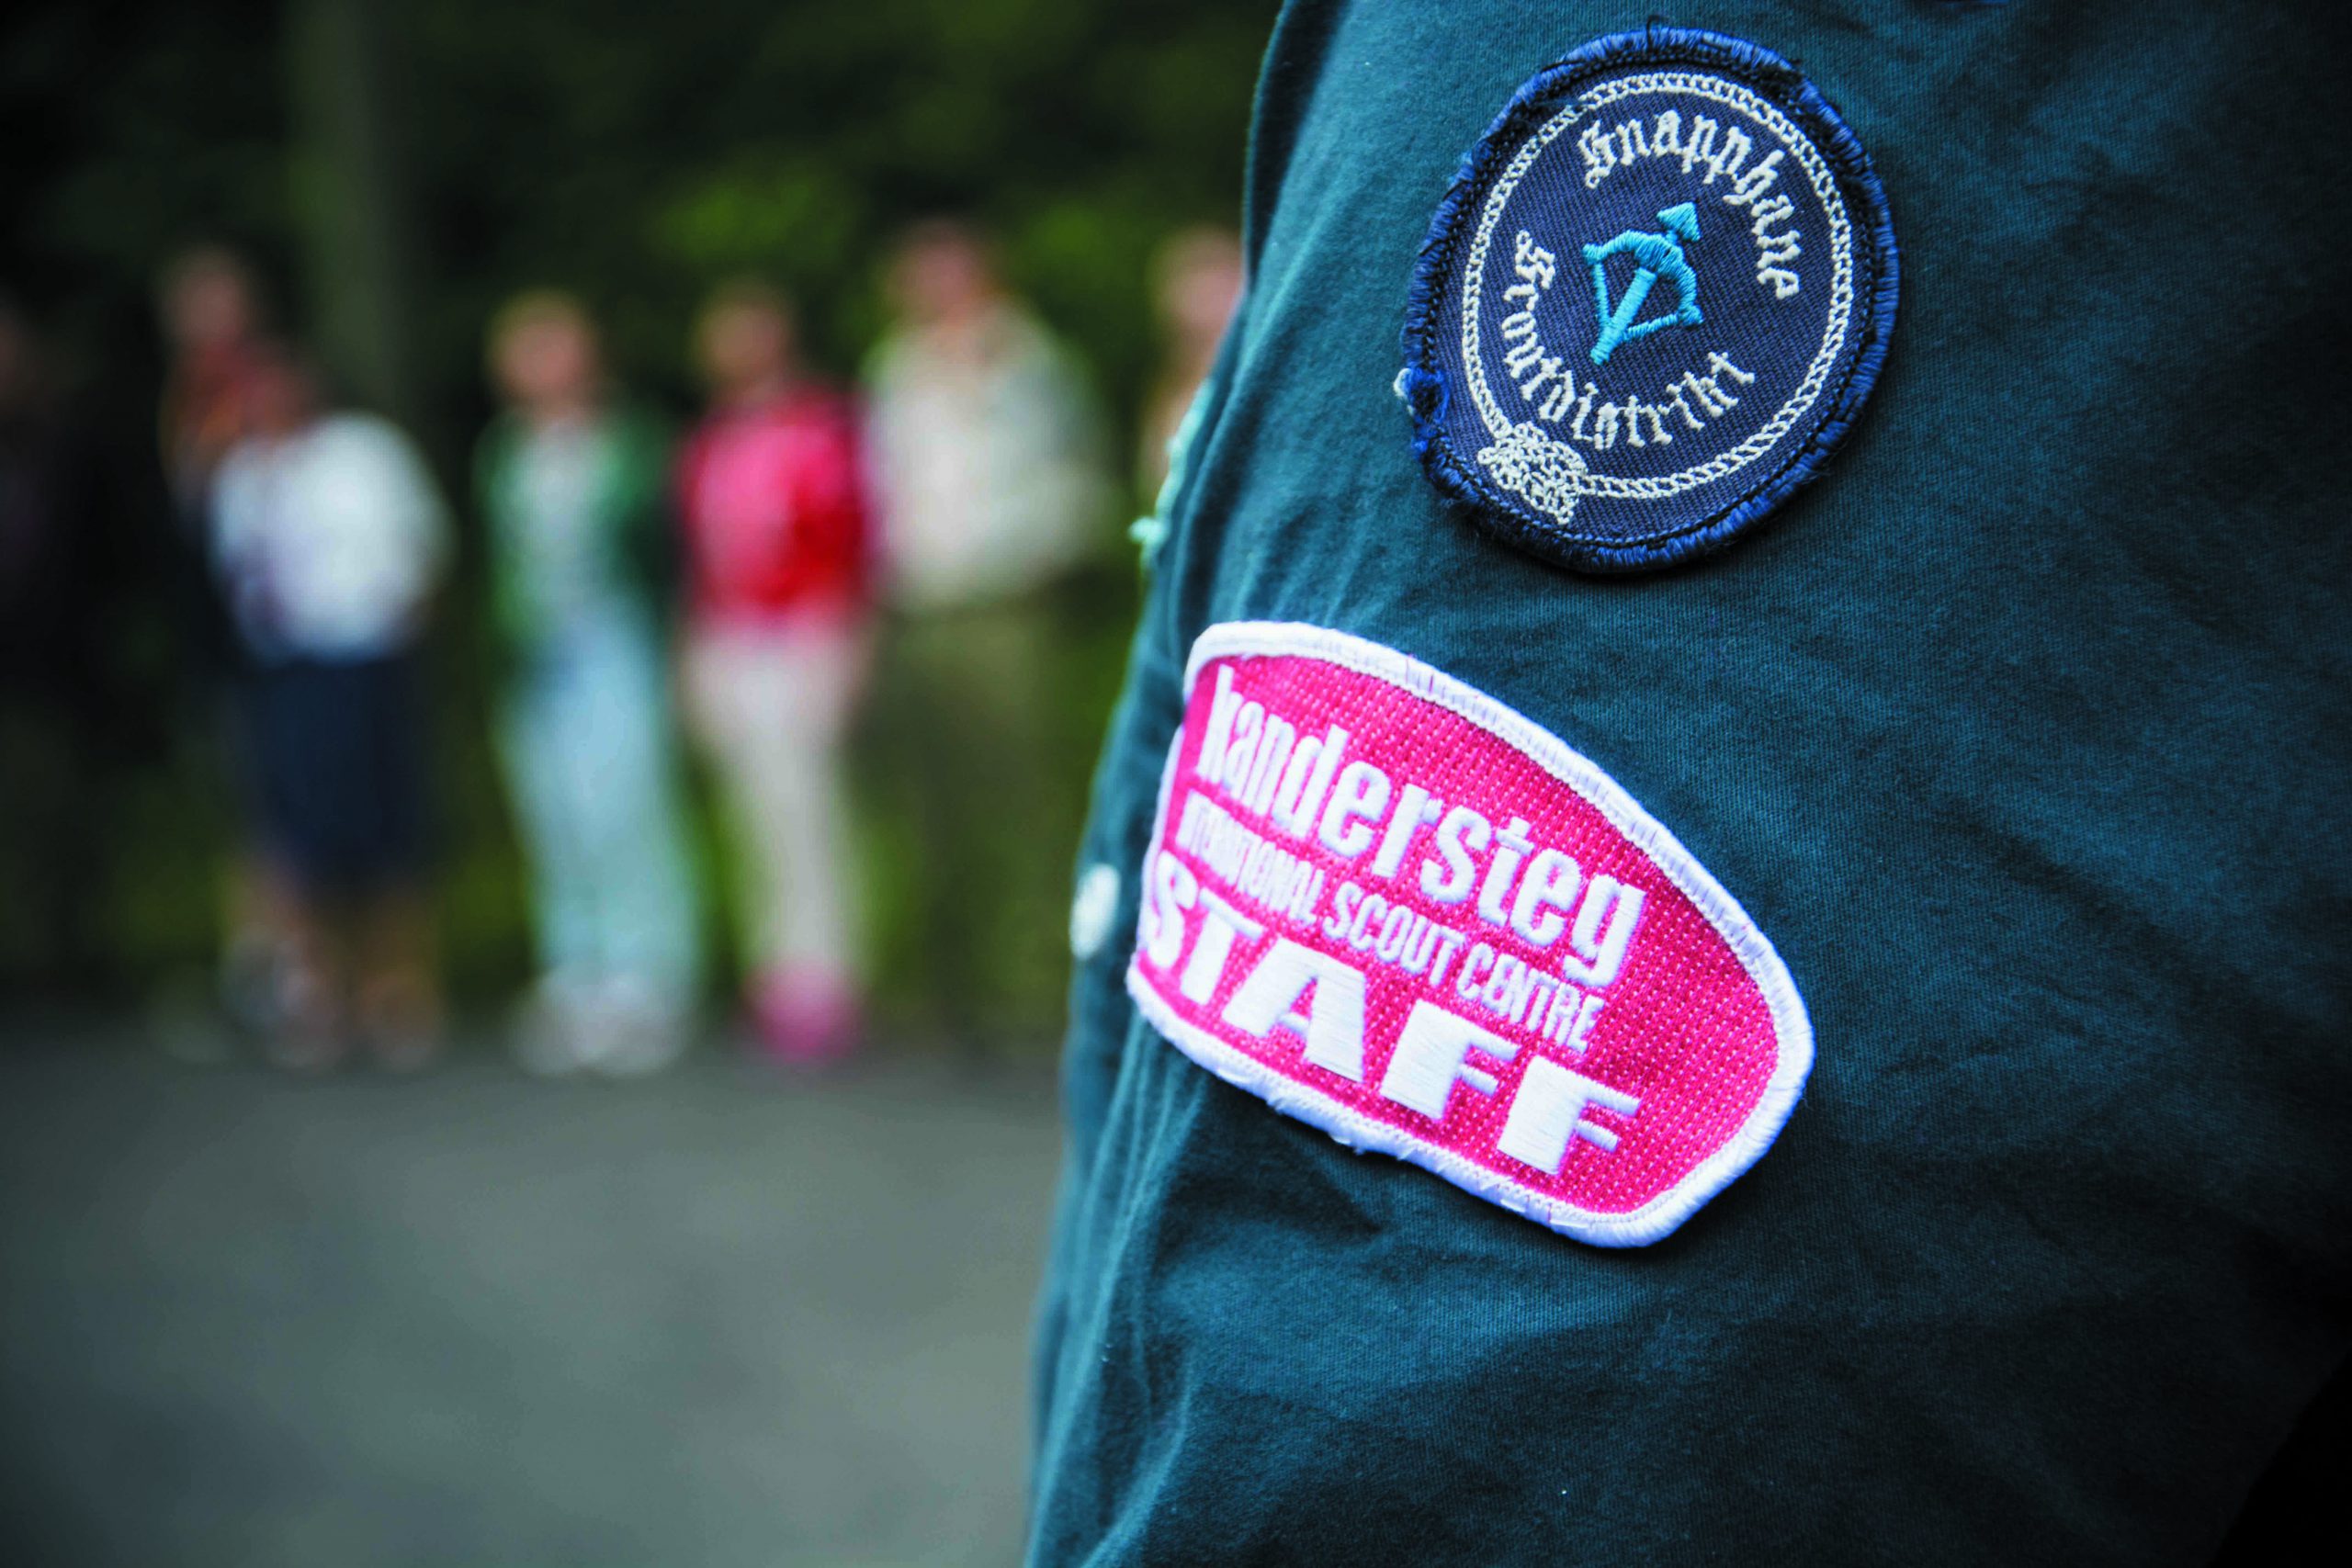 [Apel Închis] Long Term Staff – Kandersteg International Scout Center [DL: 20 ianuarie 2021]